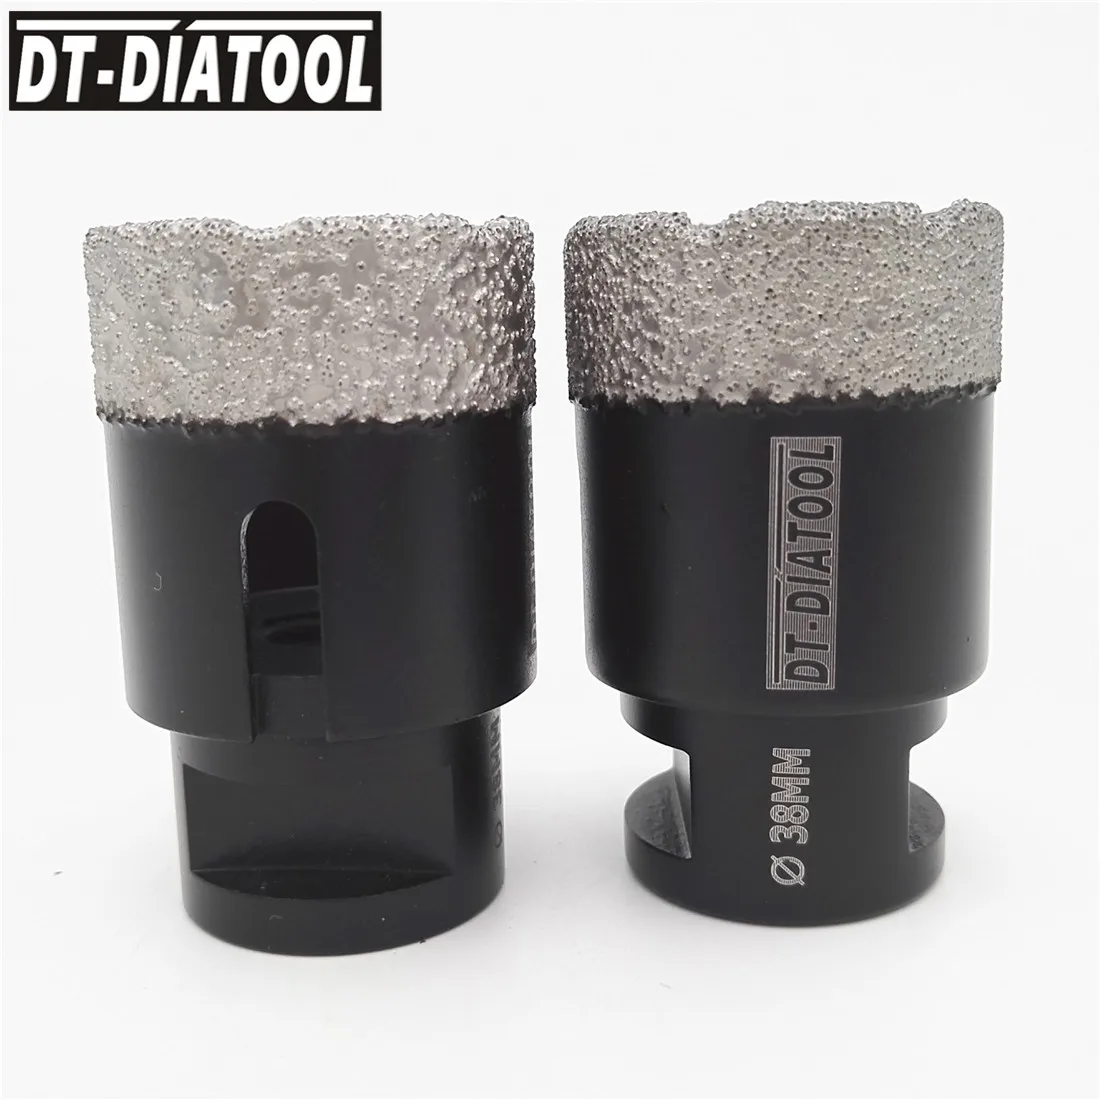 

DT-DIATOOL 2pcs/pk 38mm Dry Vacuum Brazed Diamond Drill Core Bits Cerami Tile Hole Saw Professional Drilling bits M14 thread